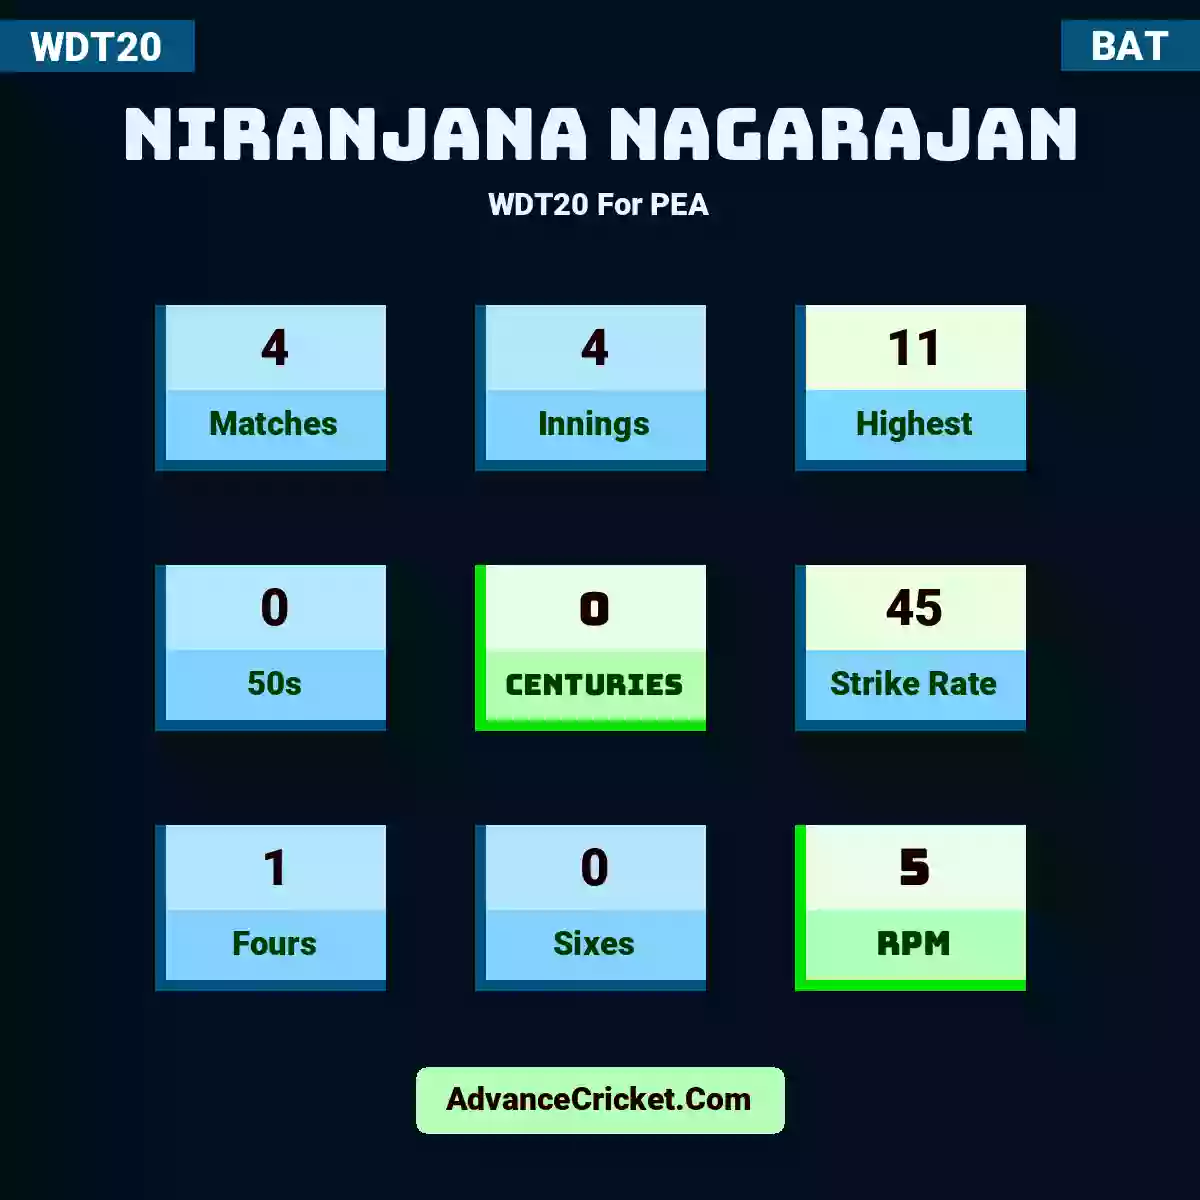 Niranjana Nagarajan WDT20  For PEA, Niranjana Nagarajan played 4 matches, scored 11 runs as highest, 0 half-centuries, and 0 centuries, with a strike rate of 45. N.Nagarajan hit 1 fours and 0 sixes, with an RPM of 5.